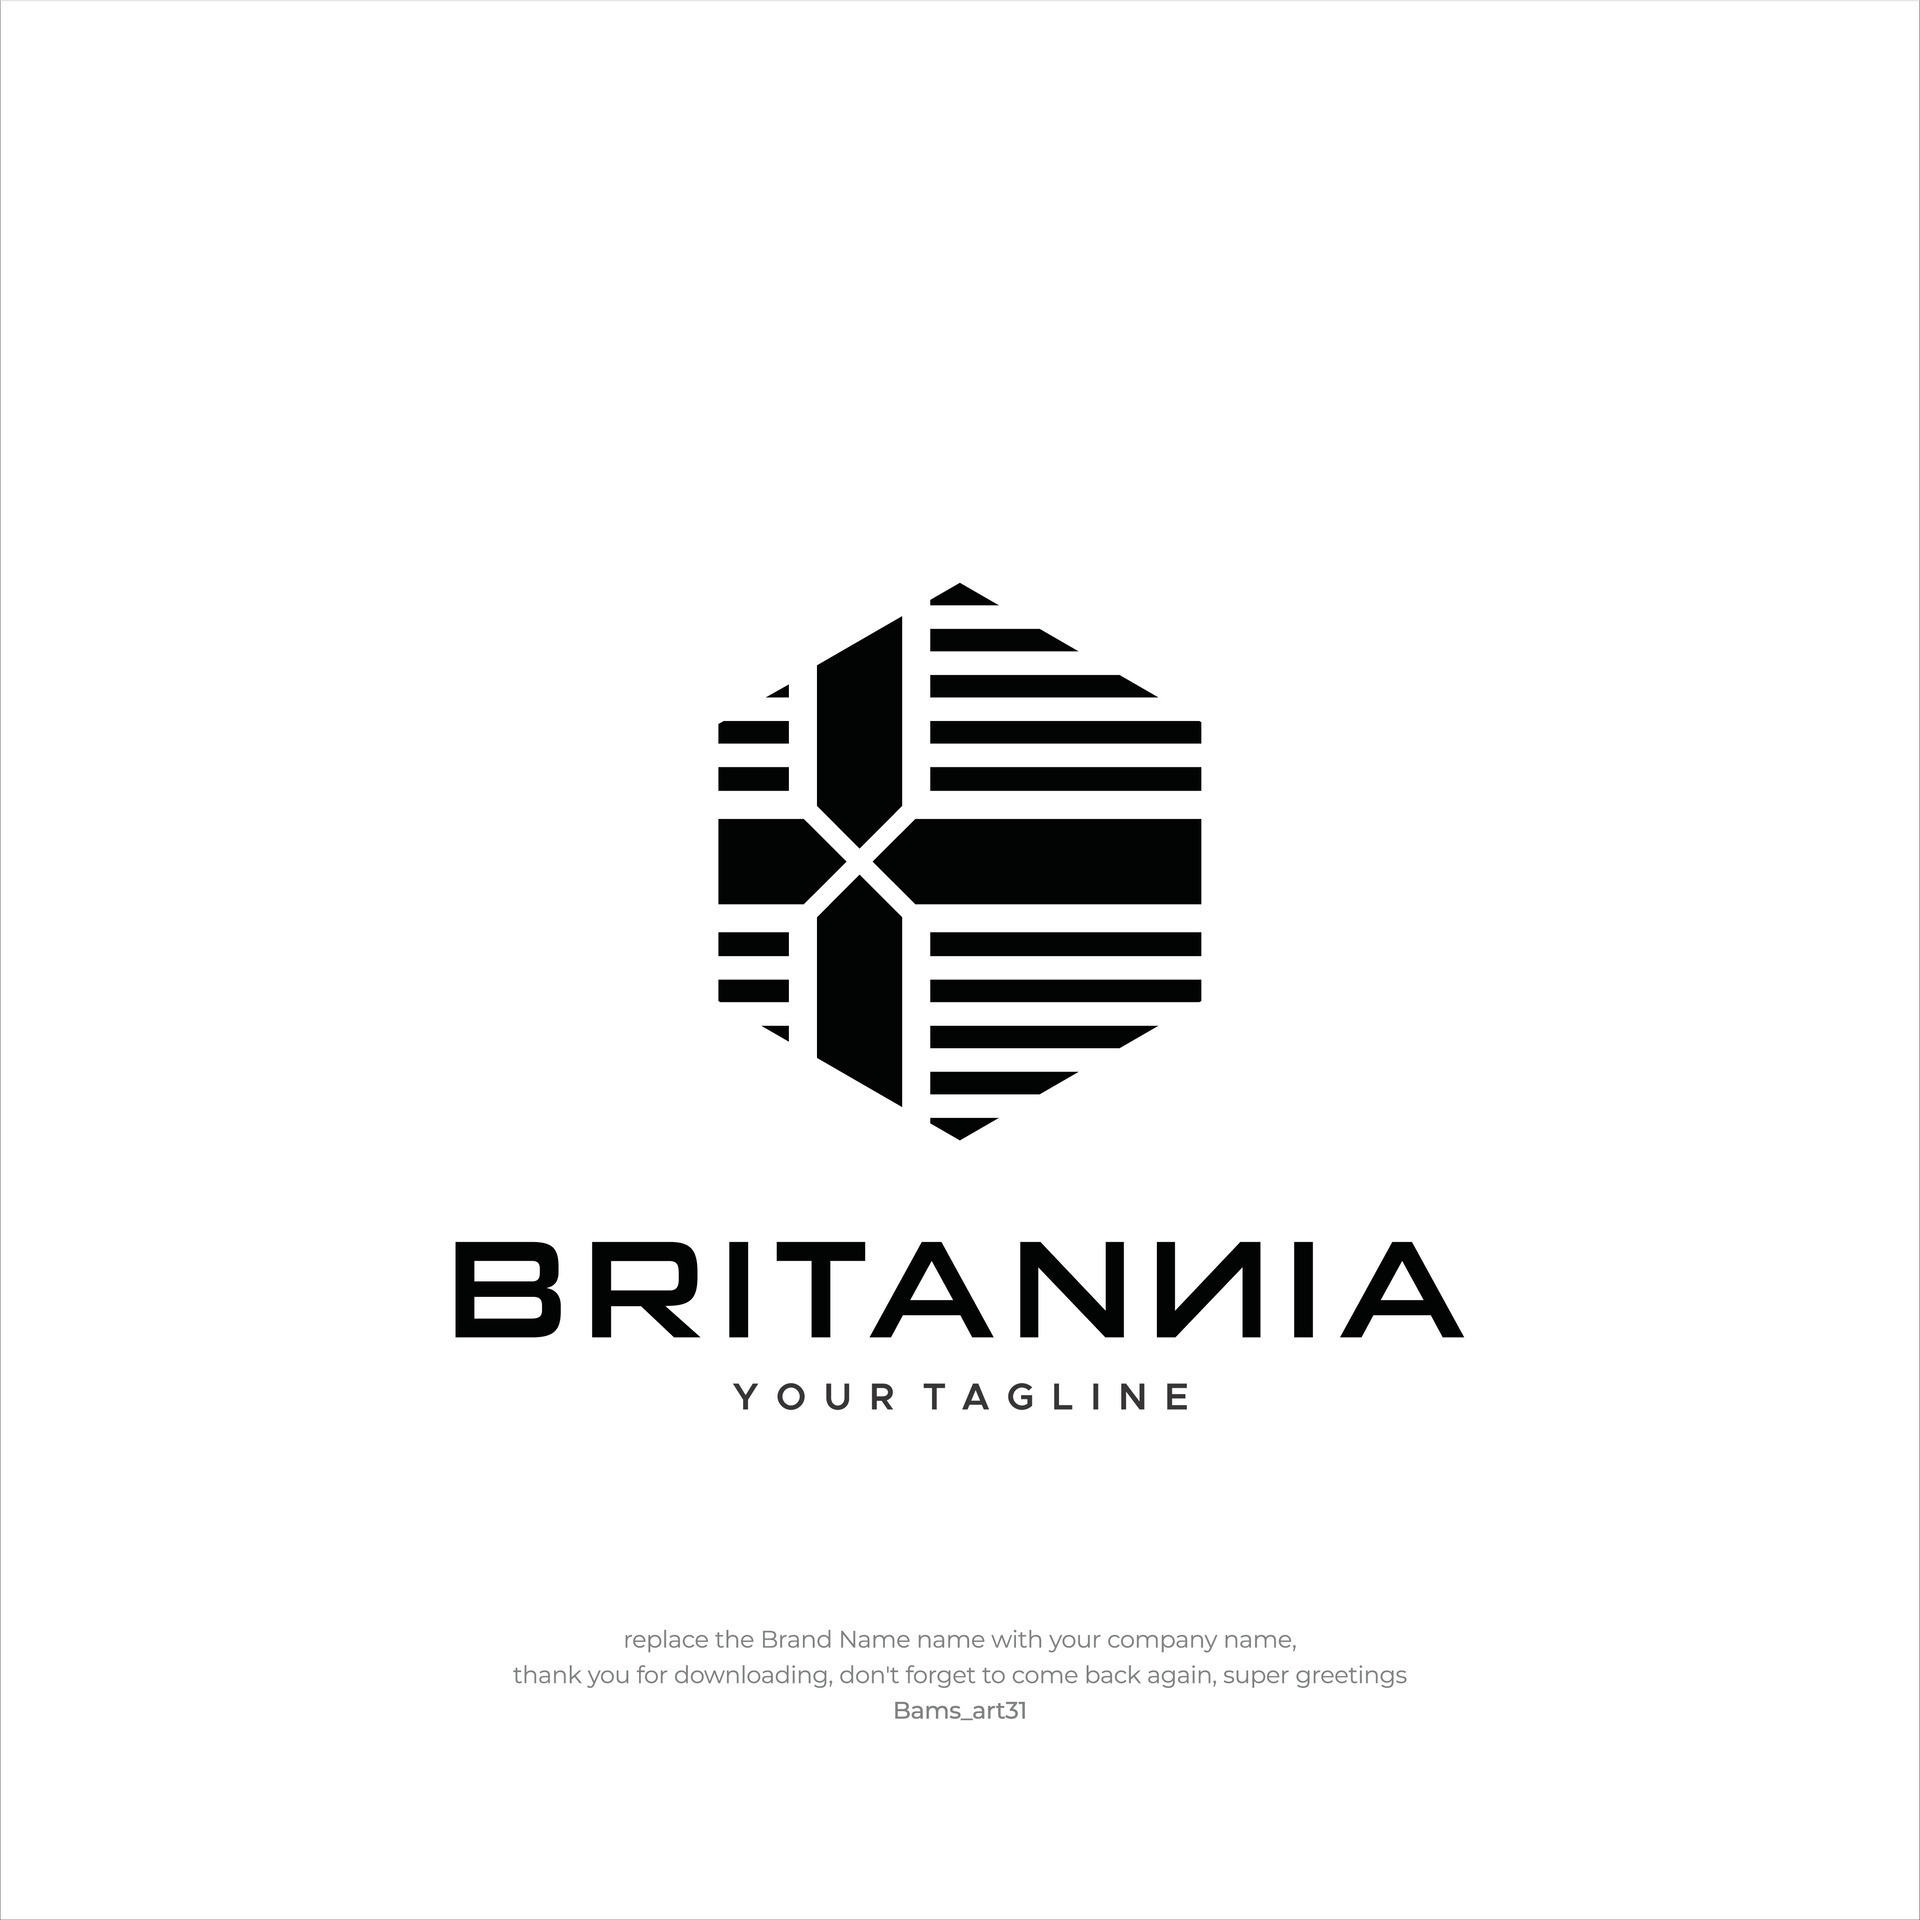 Britannia Industries - Wikipedia